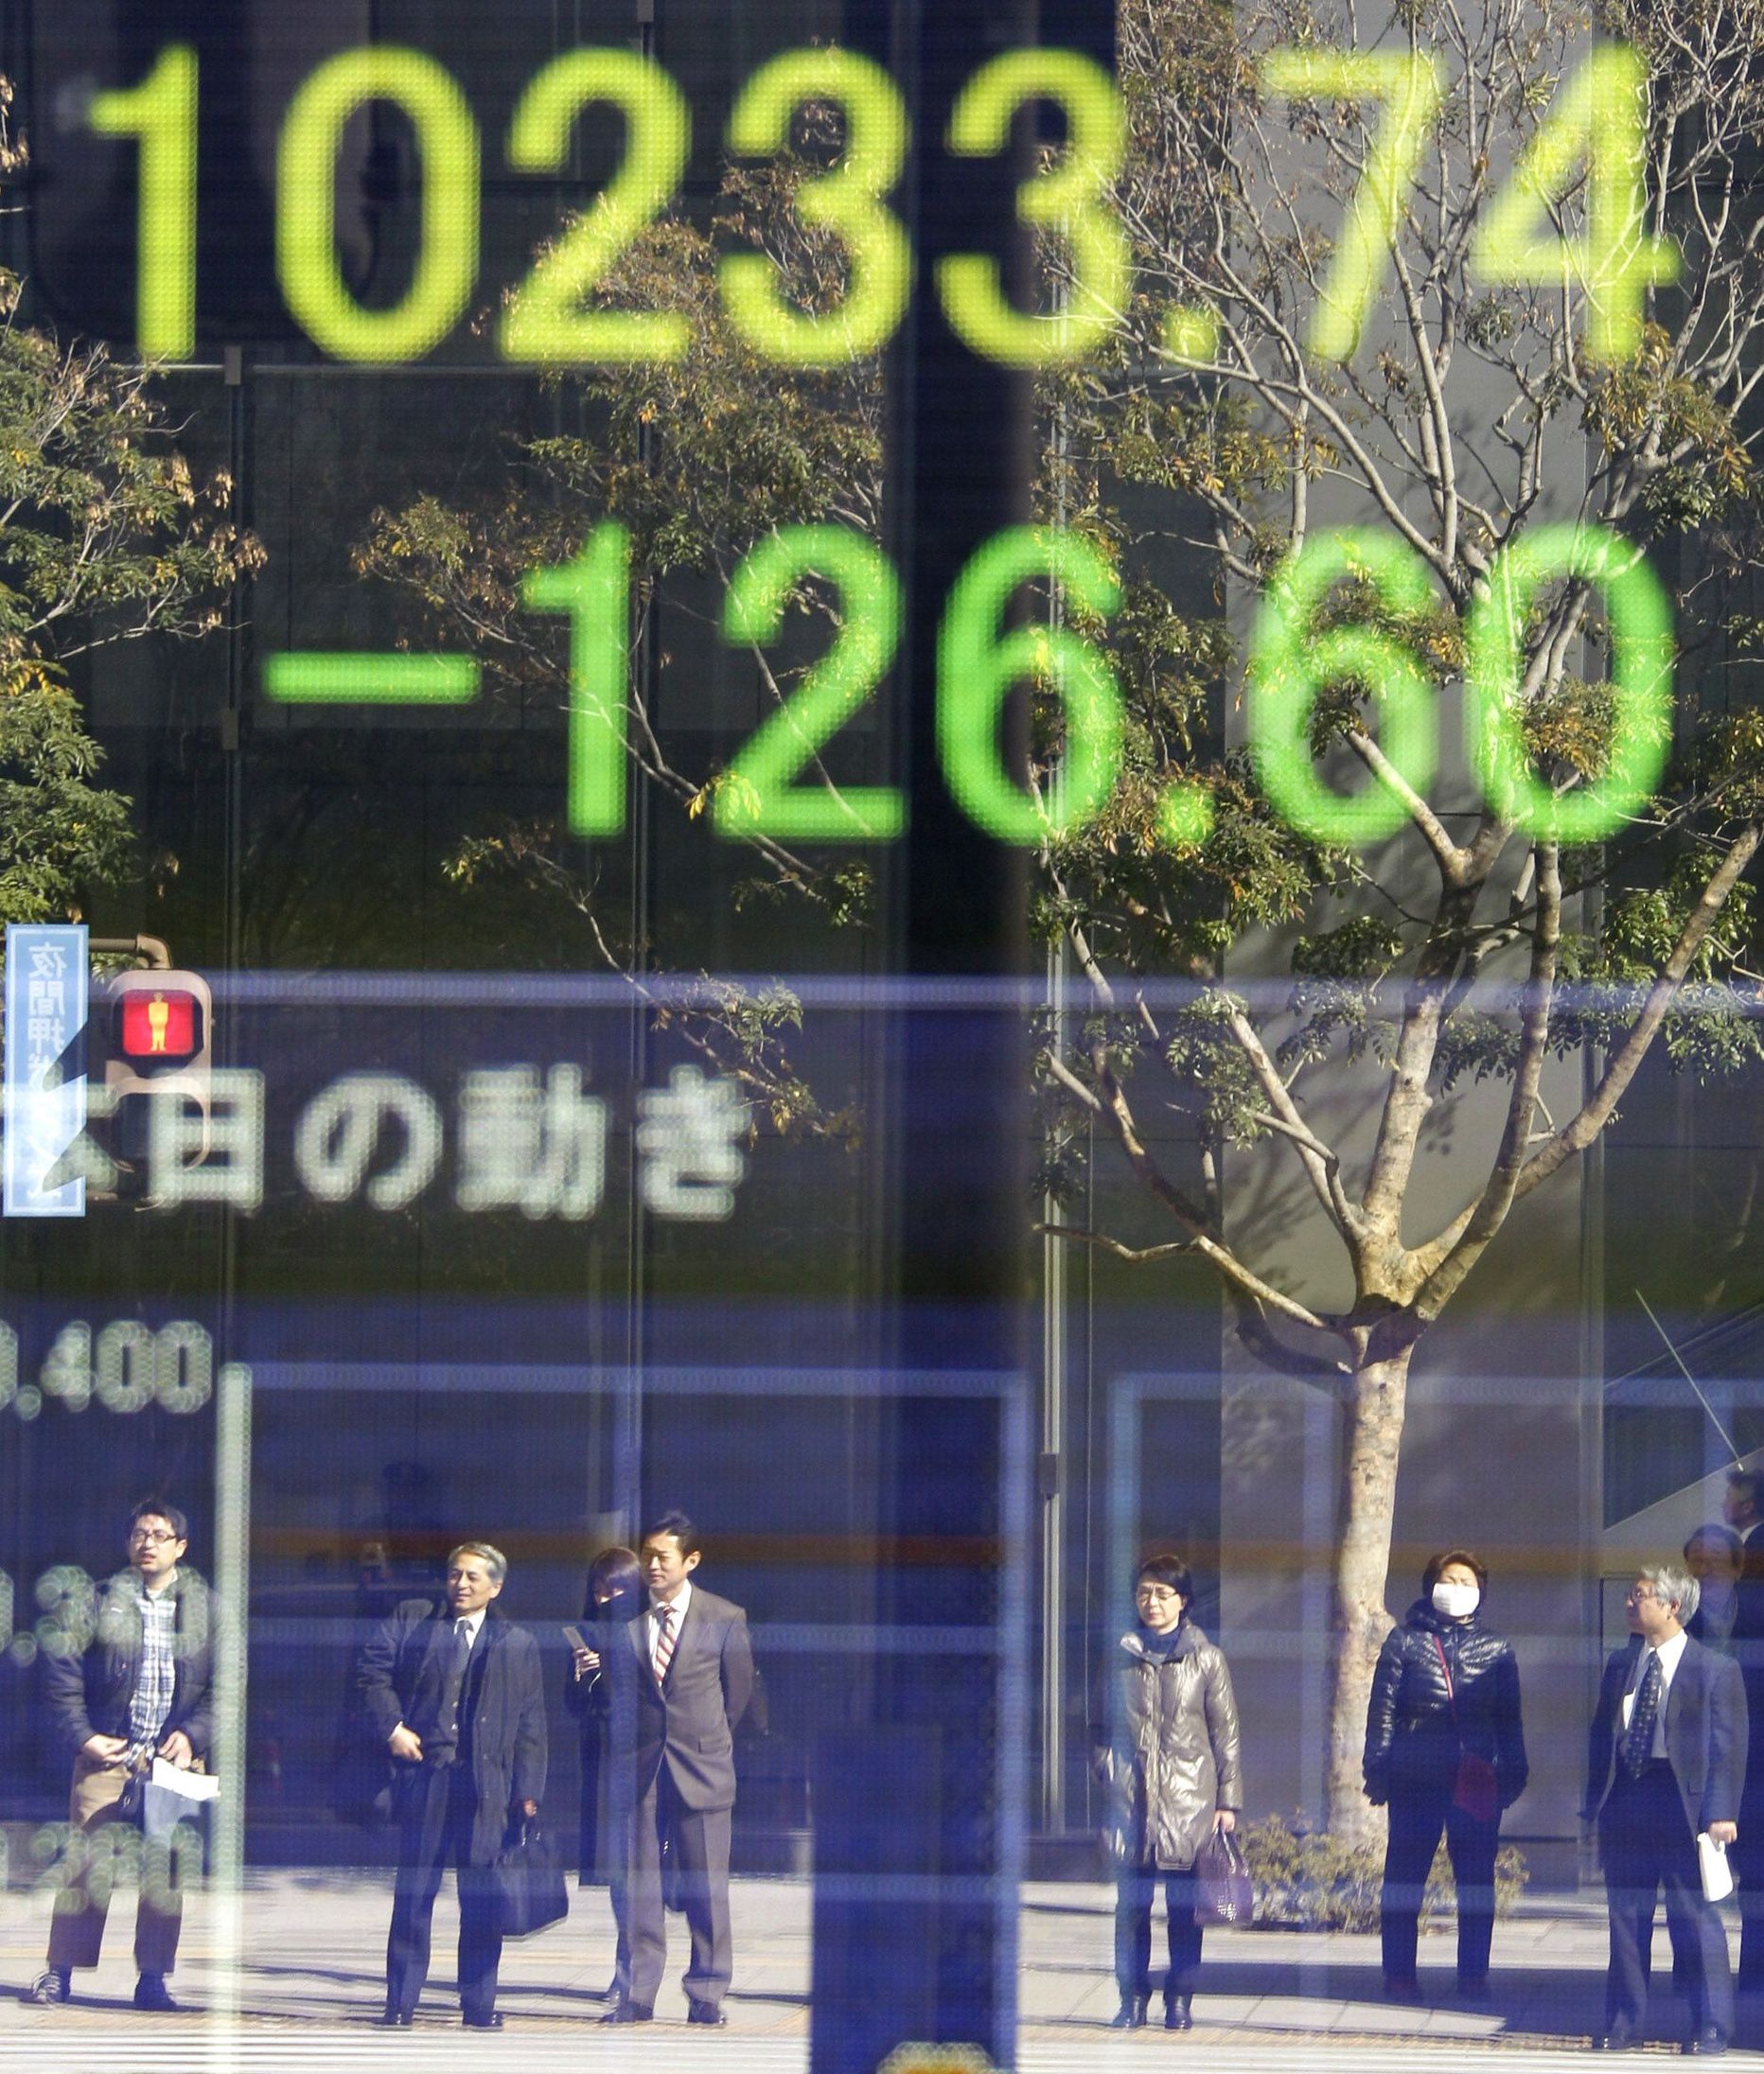 Tokyo börsi hinnatabloo.